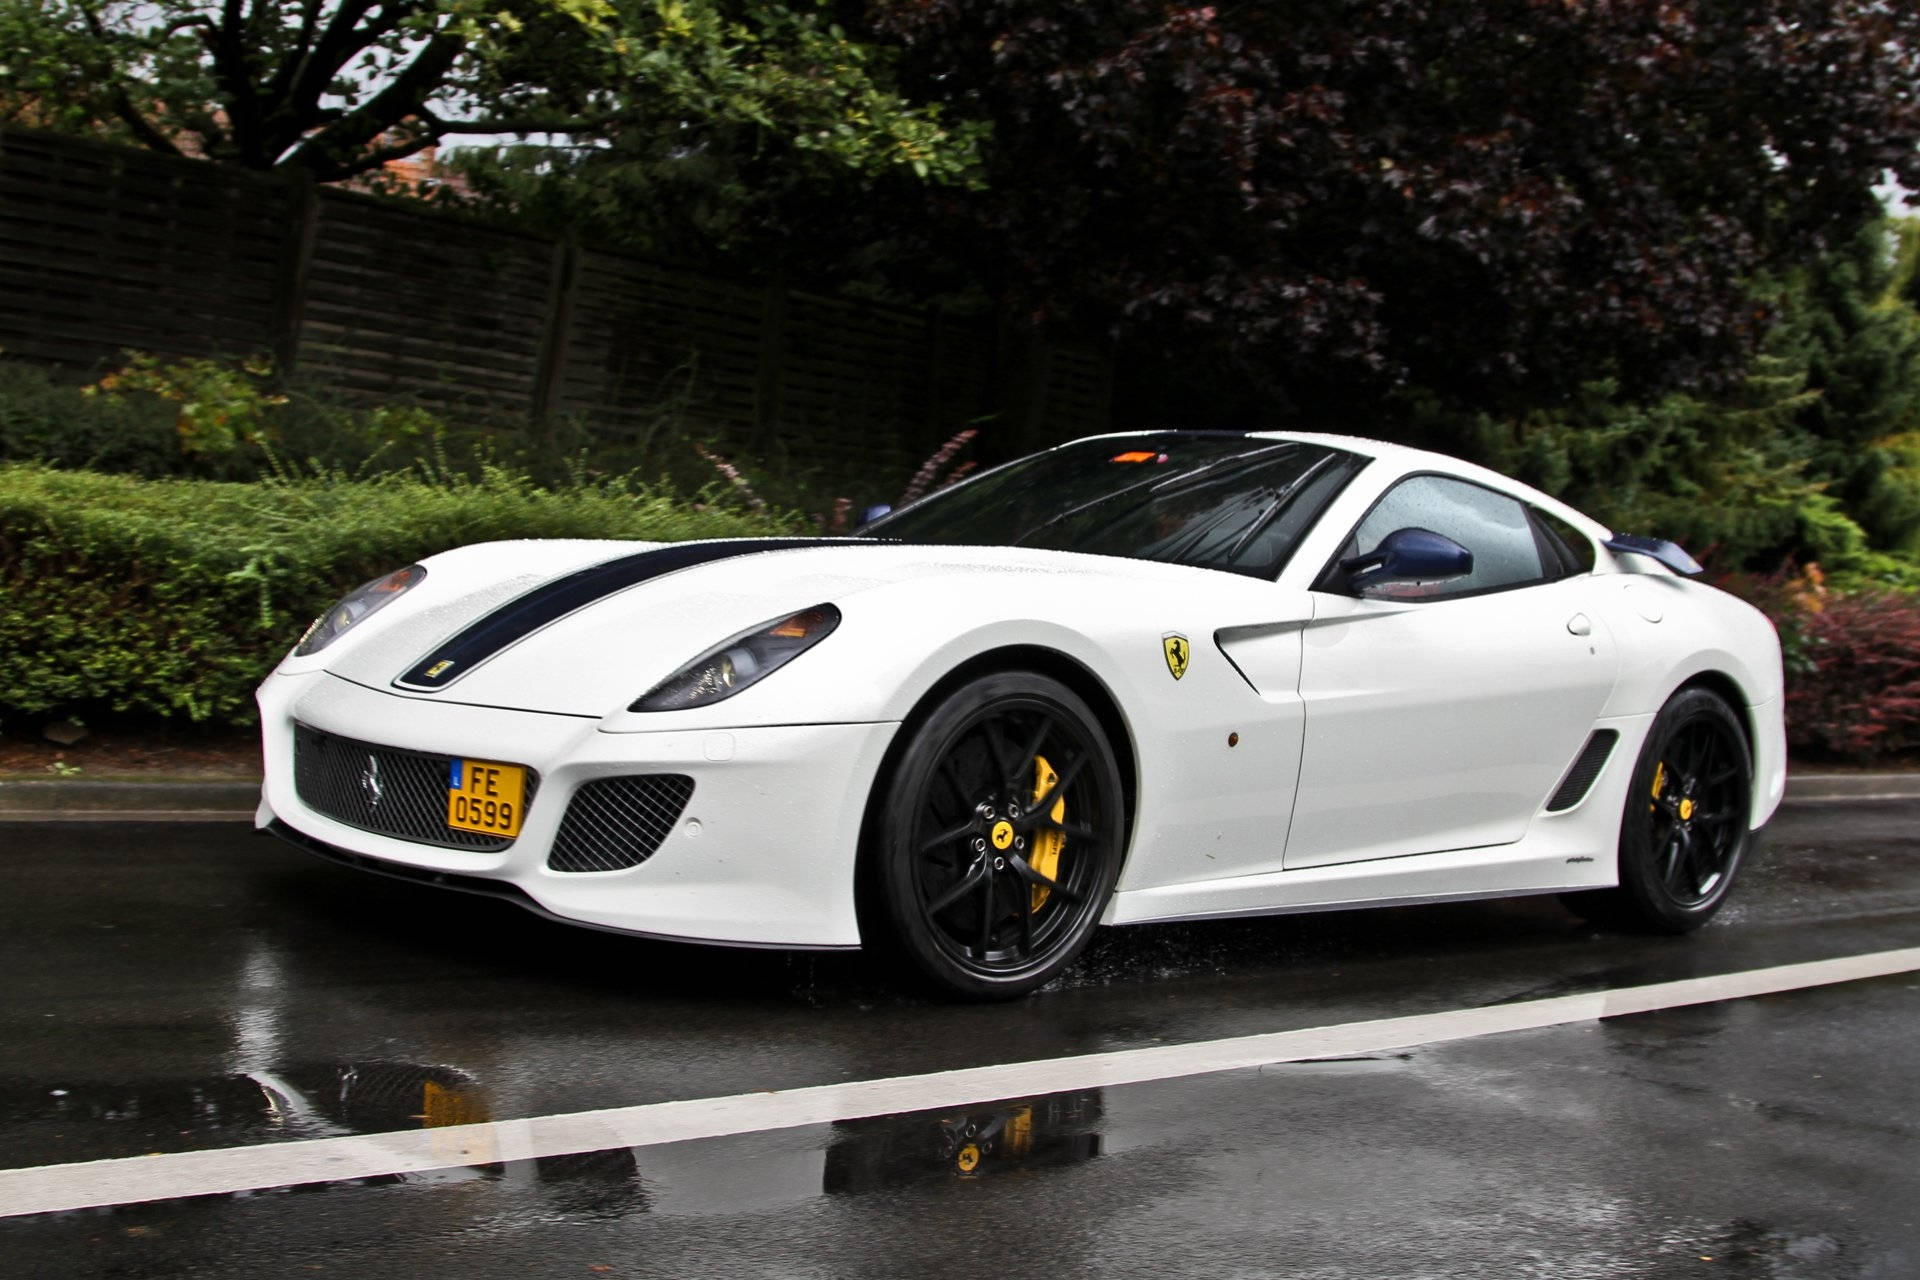 Cool White Ferrari On The Road Background